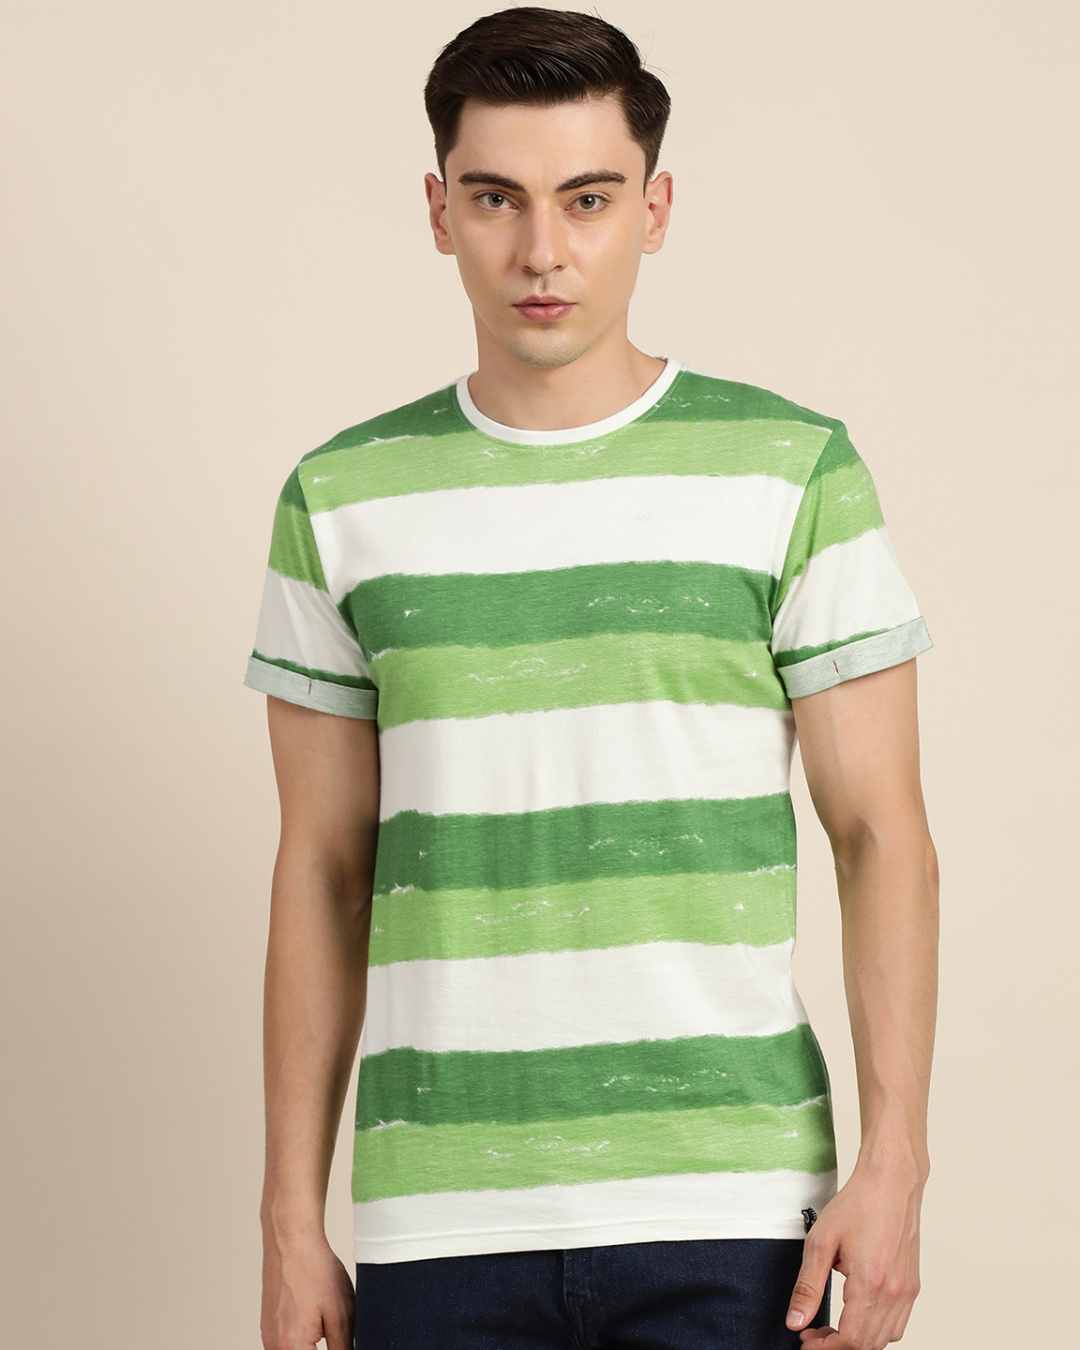 Buy Men's Green Striped Slim Fit T-shirt Online at Bewakoof